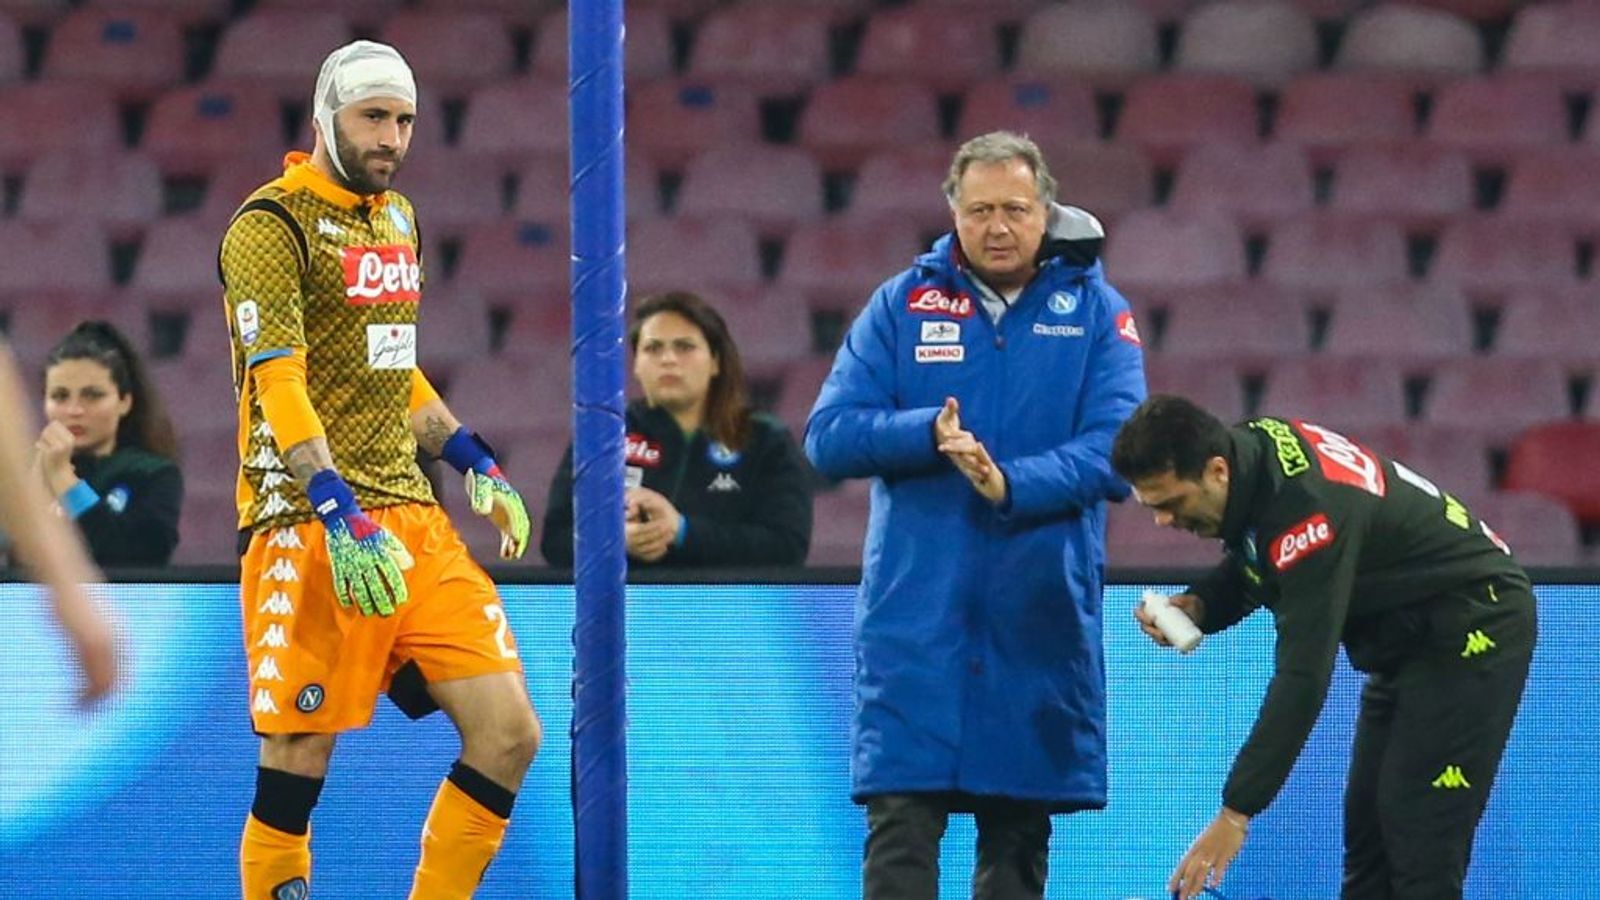 Napoli Goalkeeper David Ospina Hit in an Intense Match against Atalanta